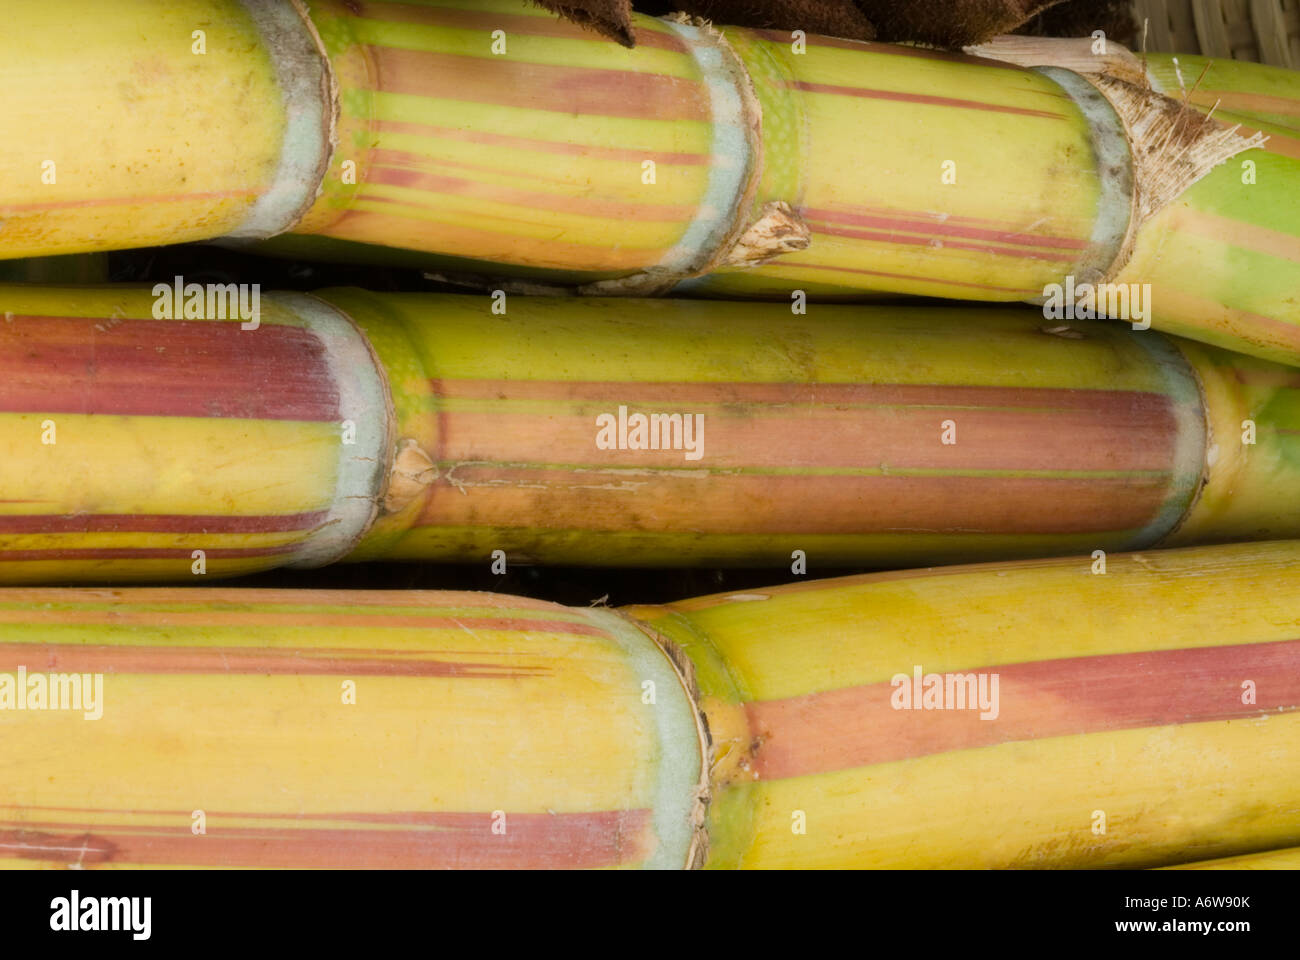 Sugarcane, Sugar Cane (Saccharum officinarum) stalks stems closeup detail close up Stock Photo